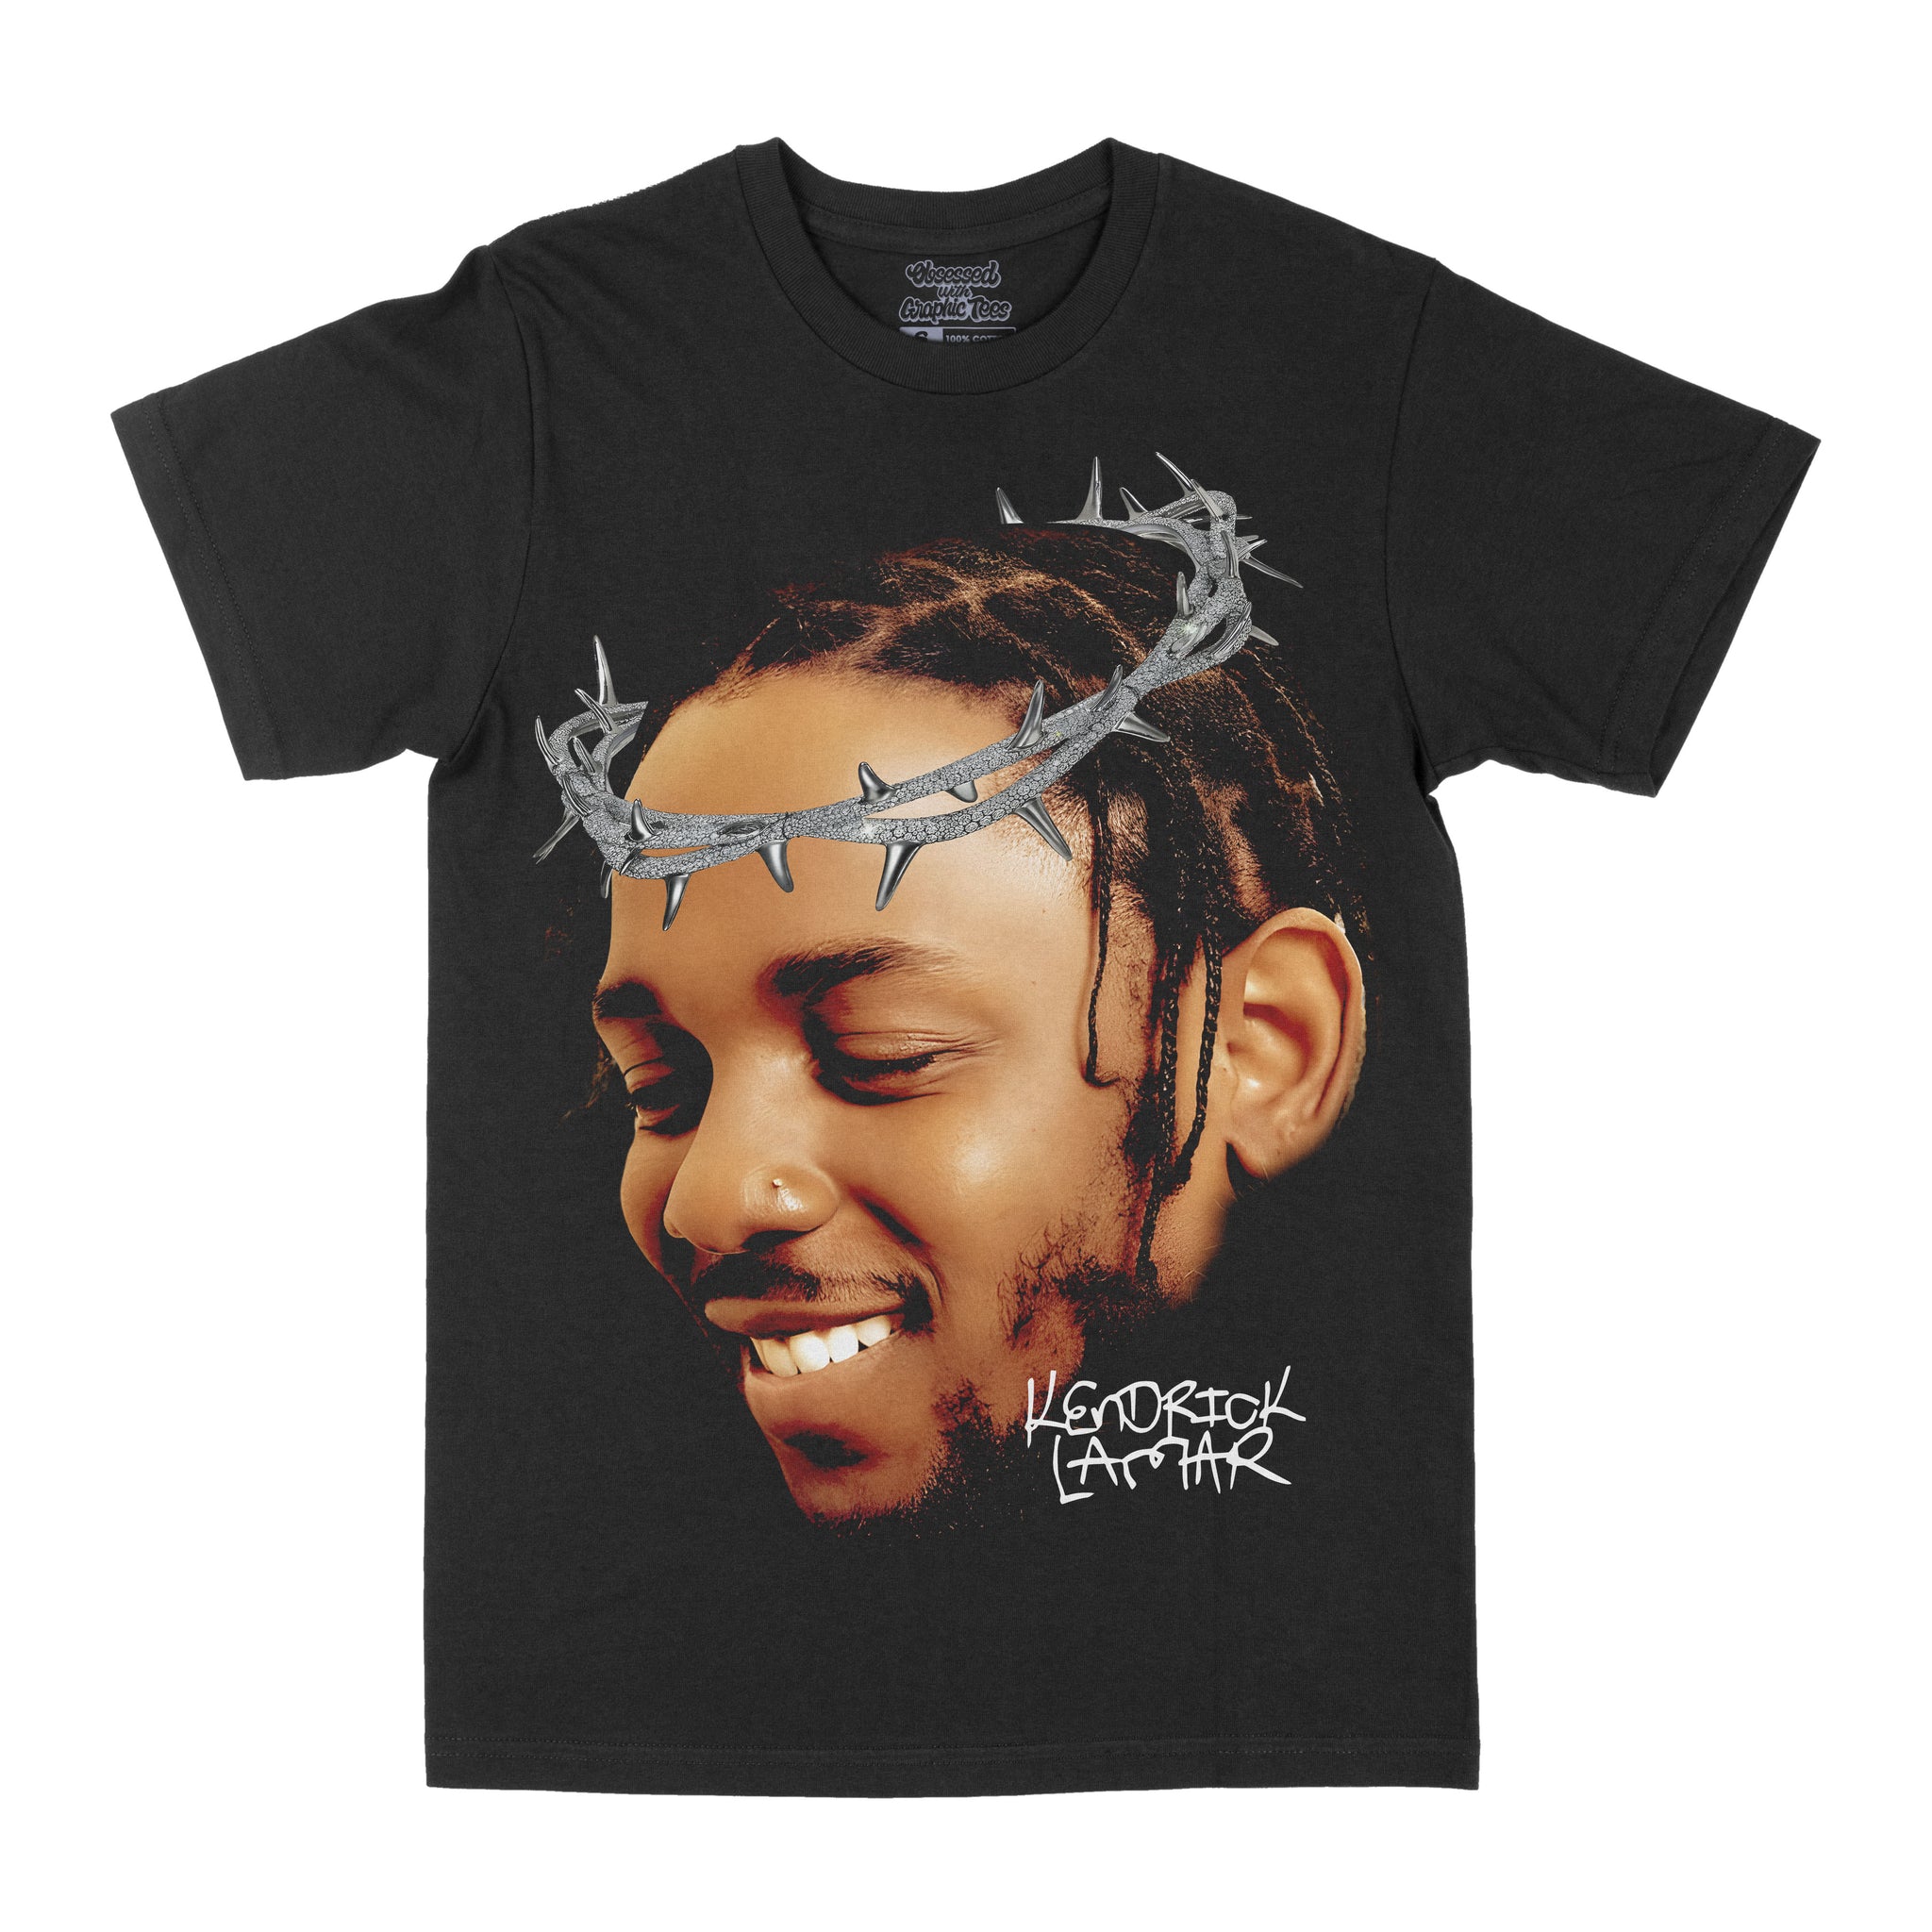 Kendrick Lamar "Big Face" Graphic Tee